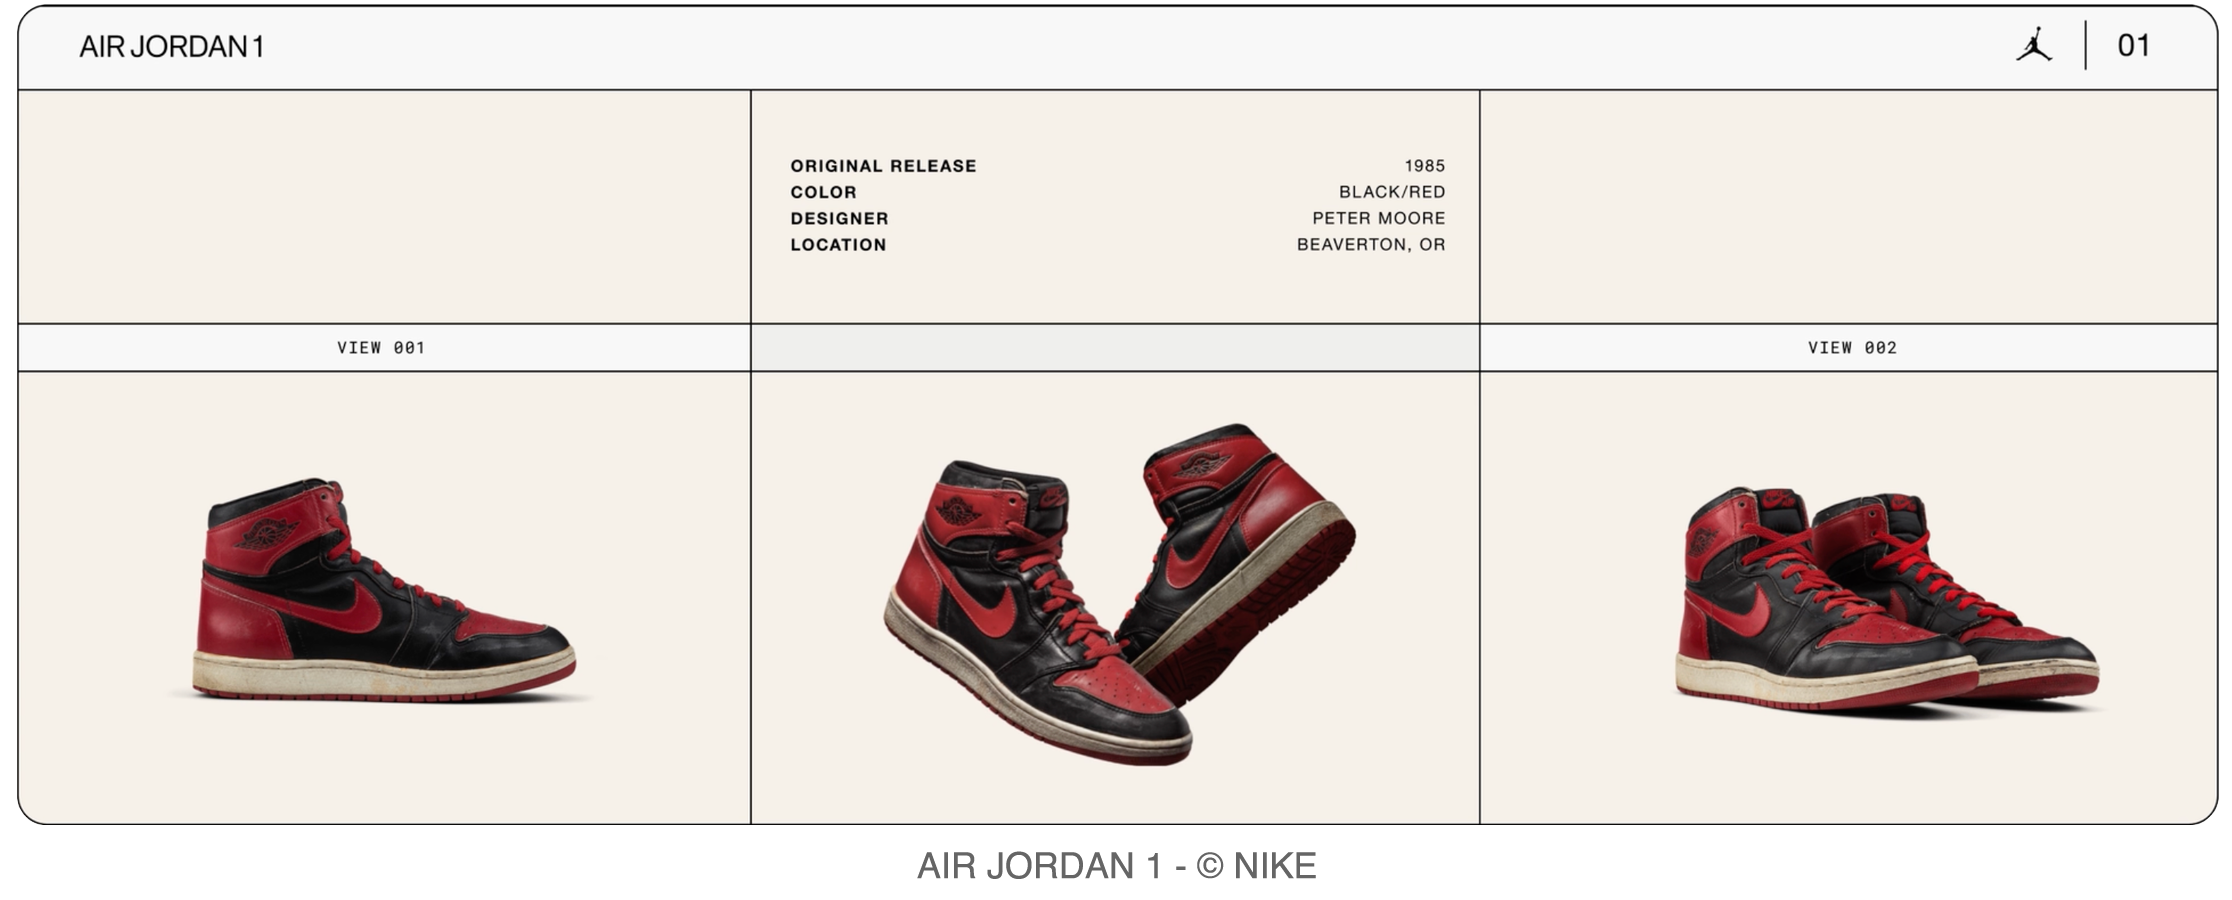 Air Jordan first model shoes